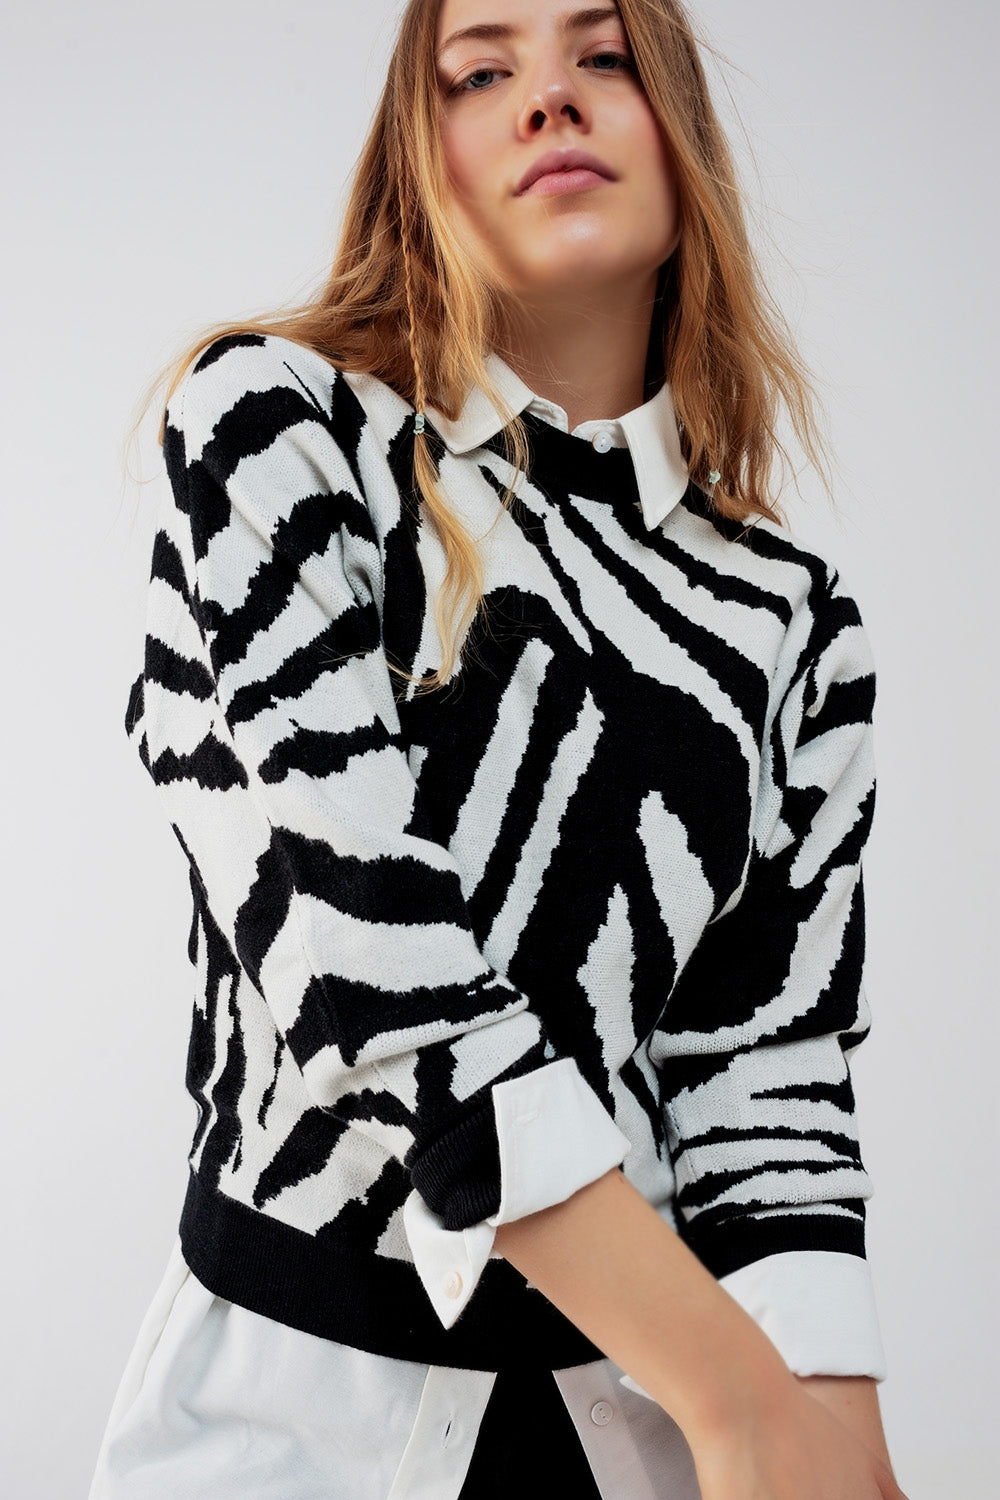 Knitted jumper in black zebra print